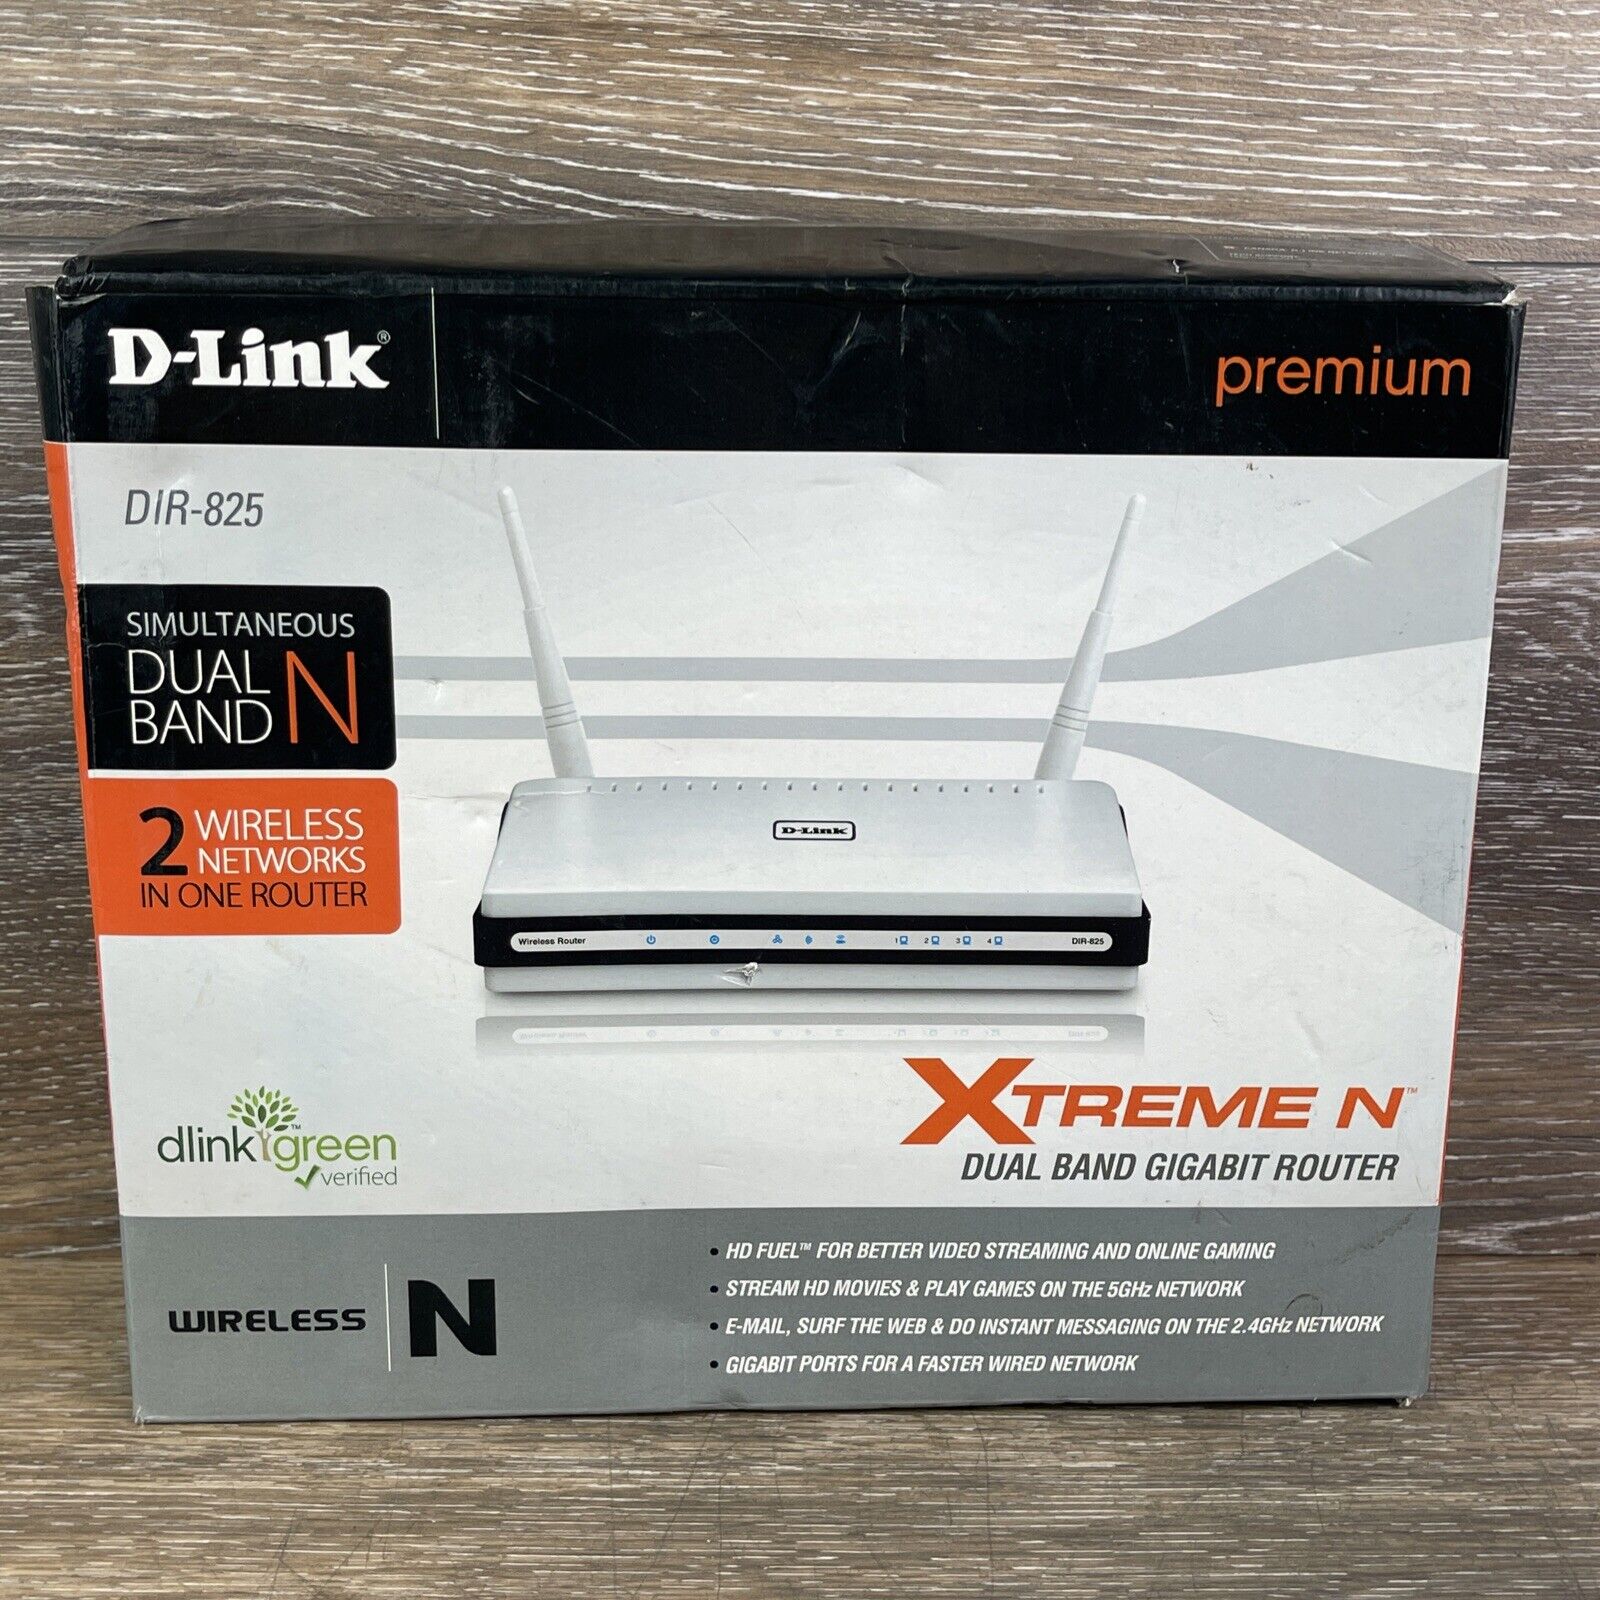 D-Link Xtreme N DIR-825 4-Port Gigabit Wireless N Router load with DD-WRT